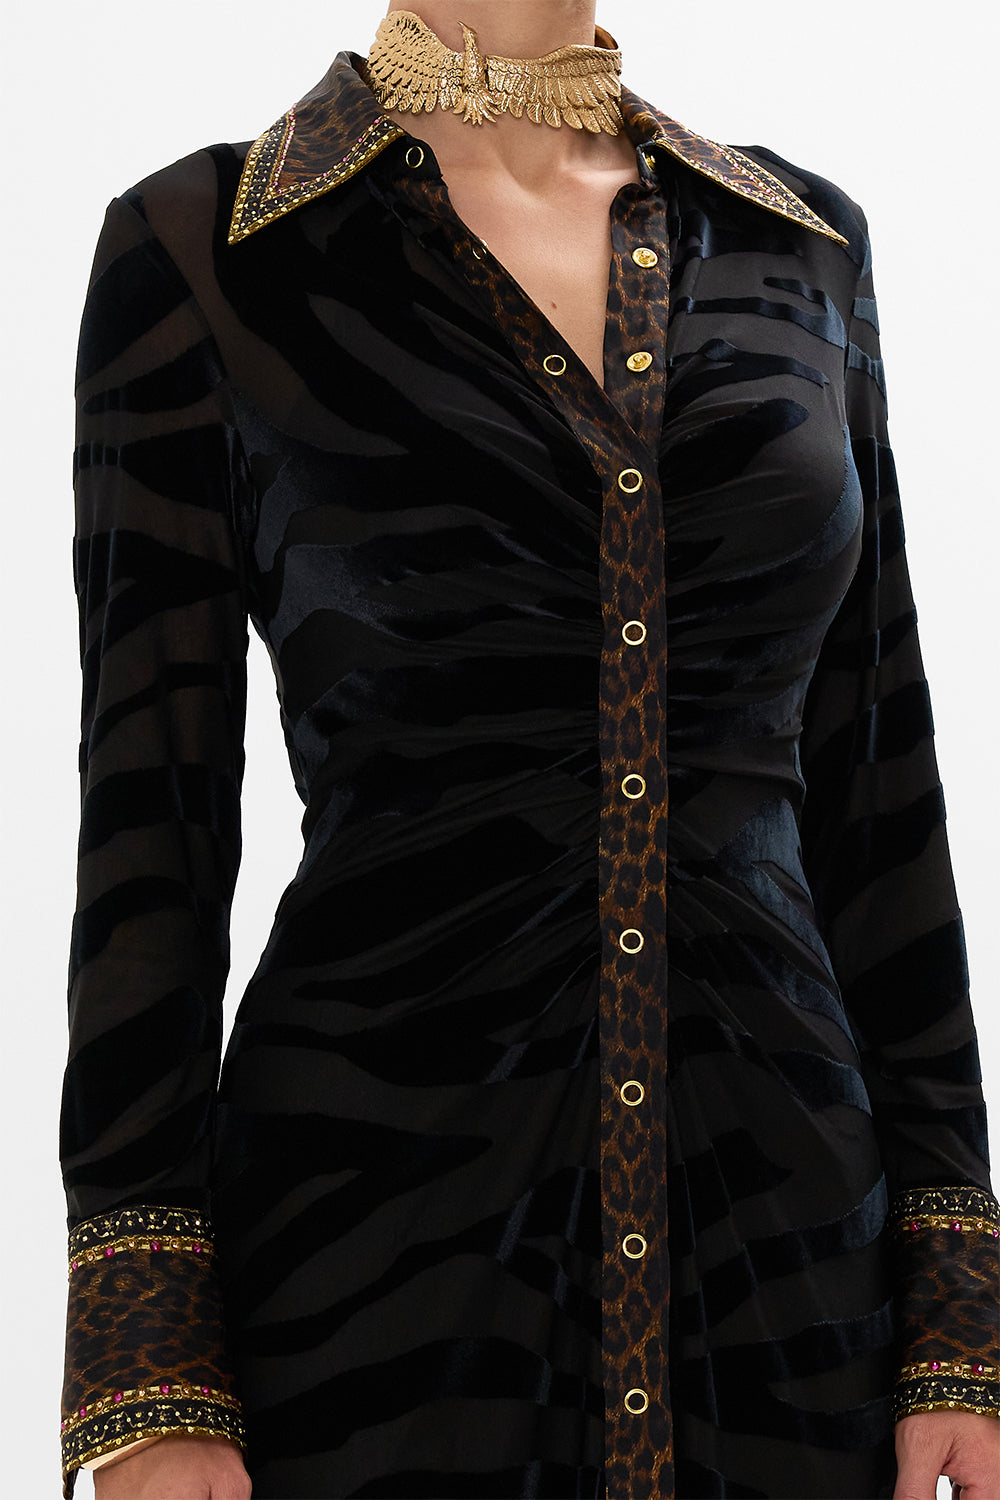 CAMILLA leopard stretch velvet animal shirt dress in Amsterglam print.